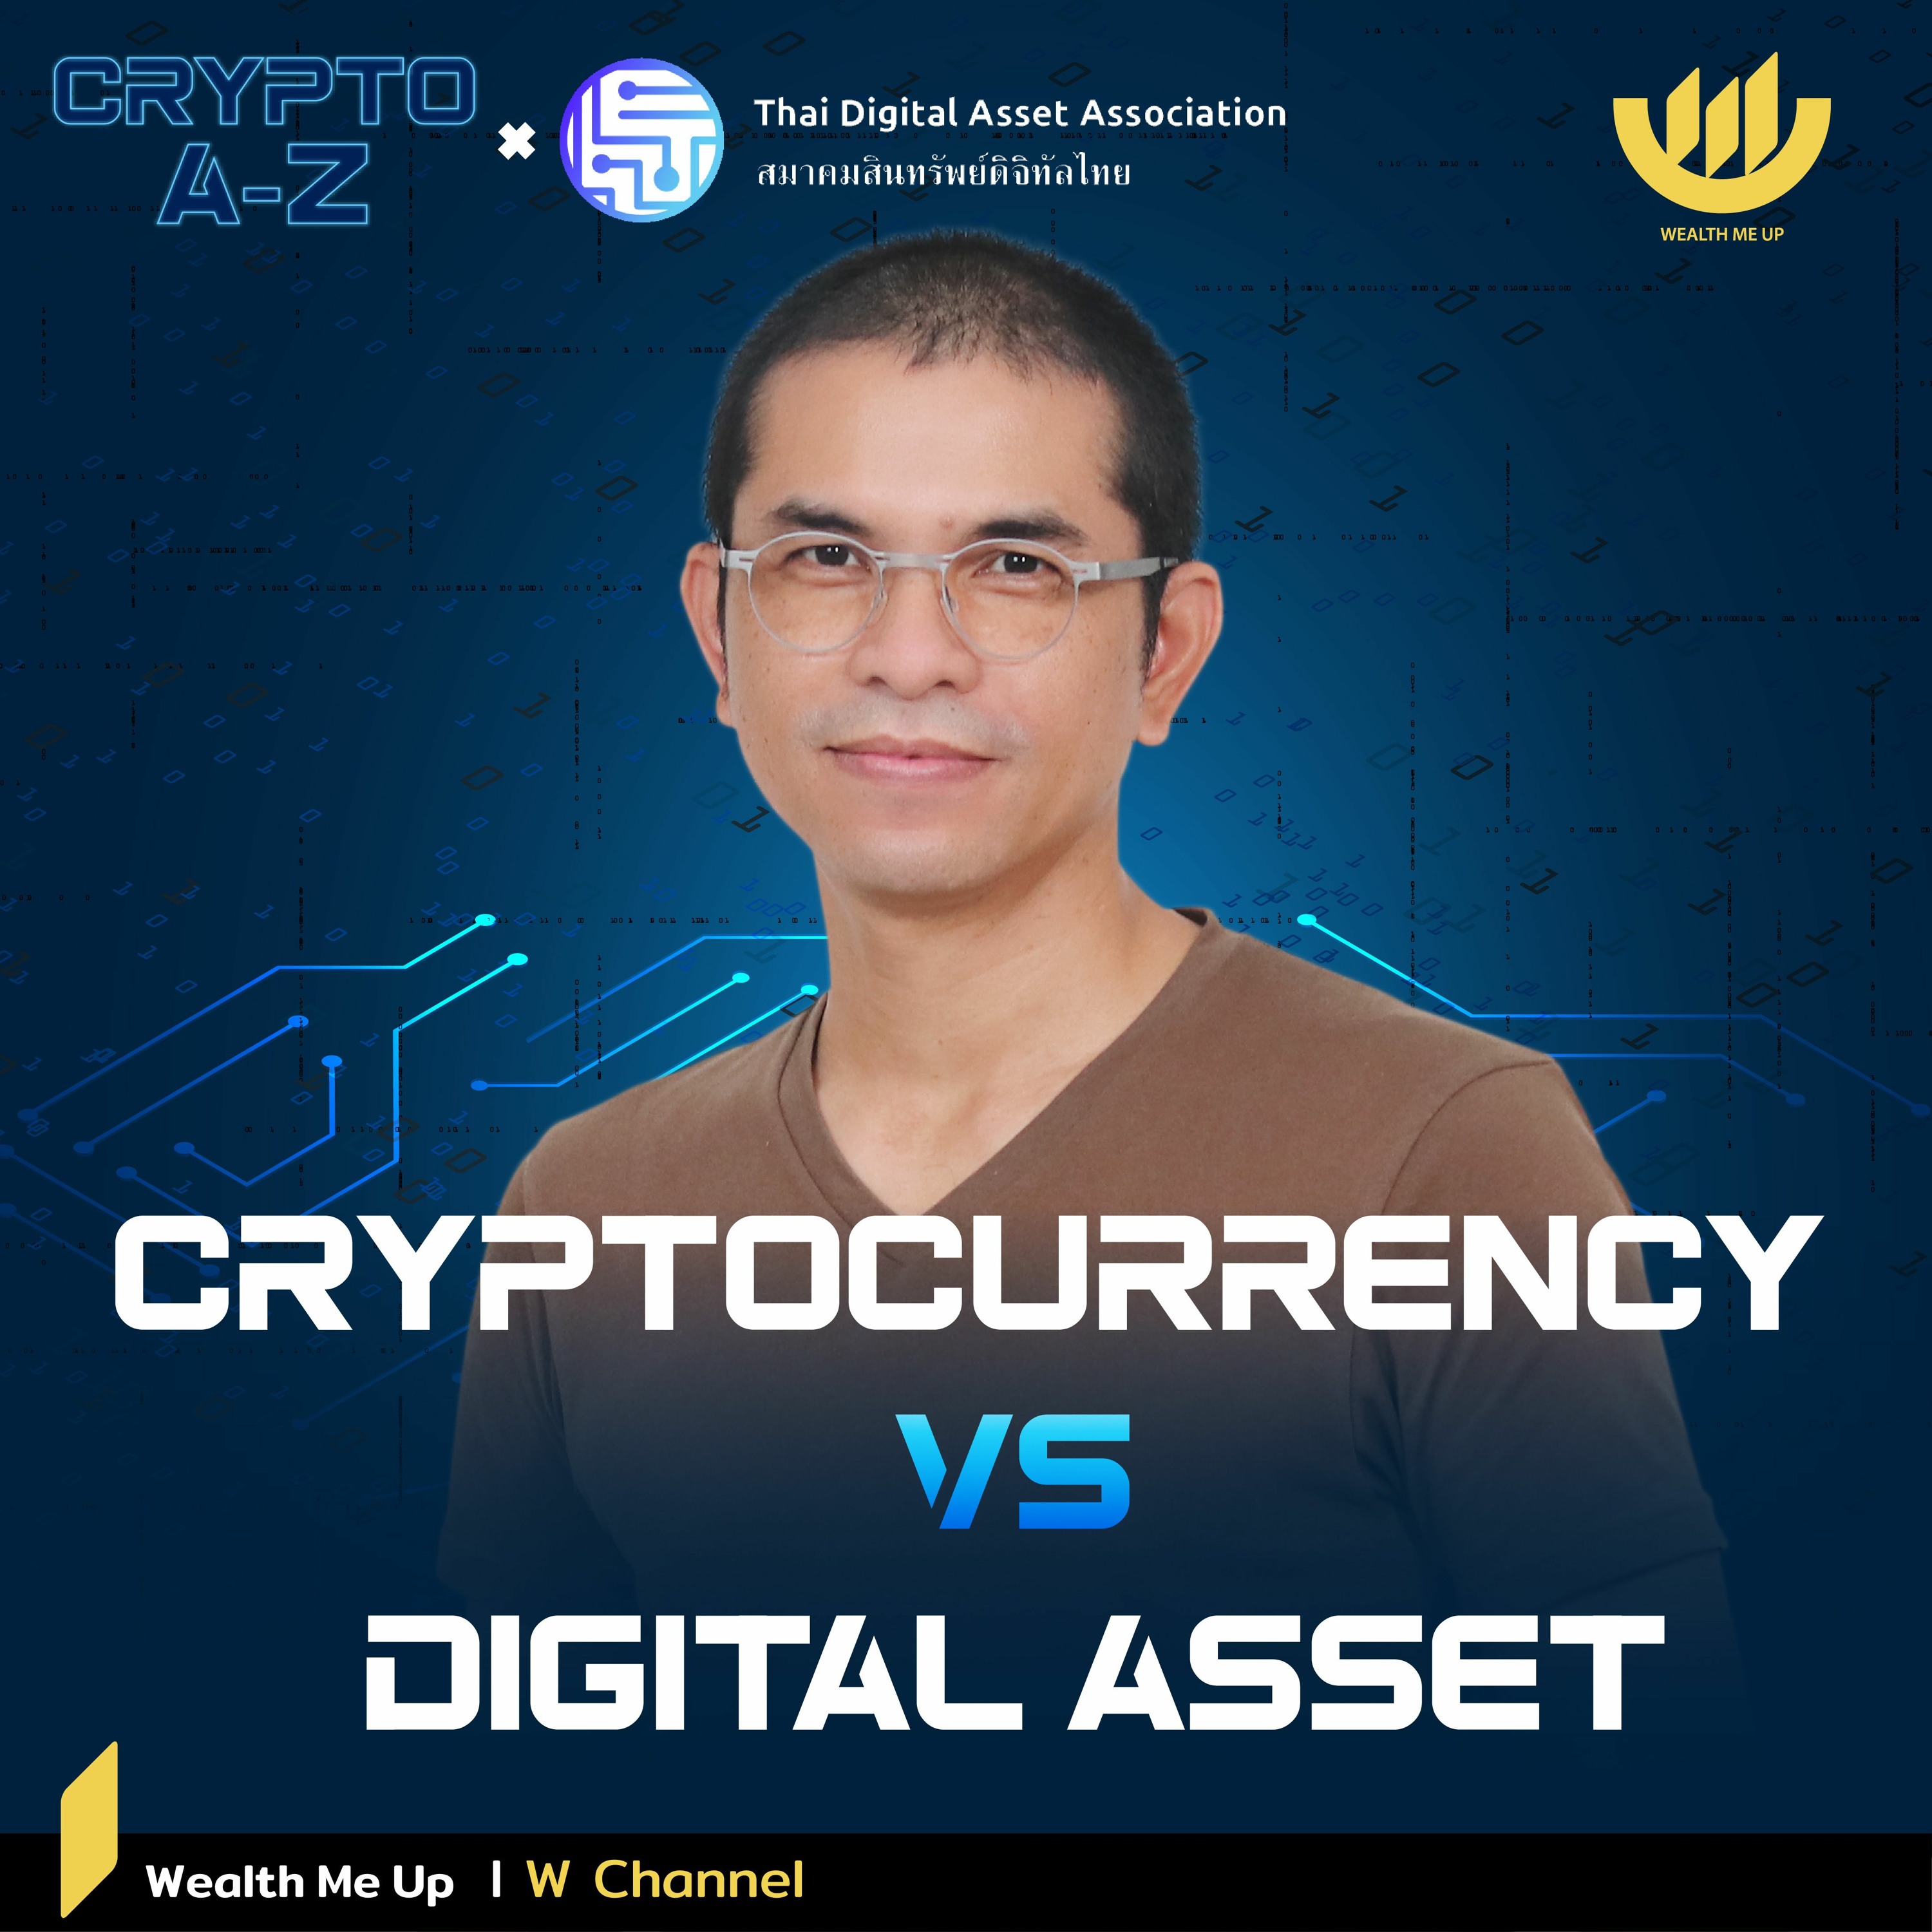 “Cryptocurrency” vs “Digital Asset” | Crypto A-Z